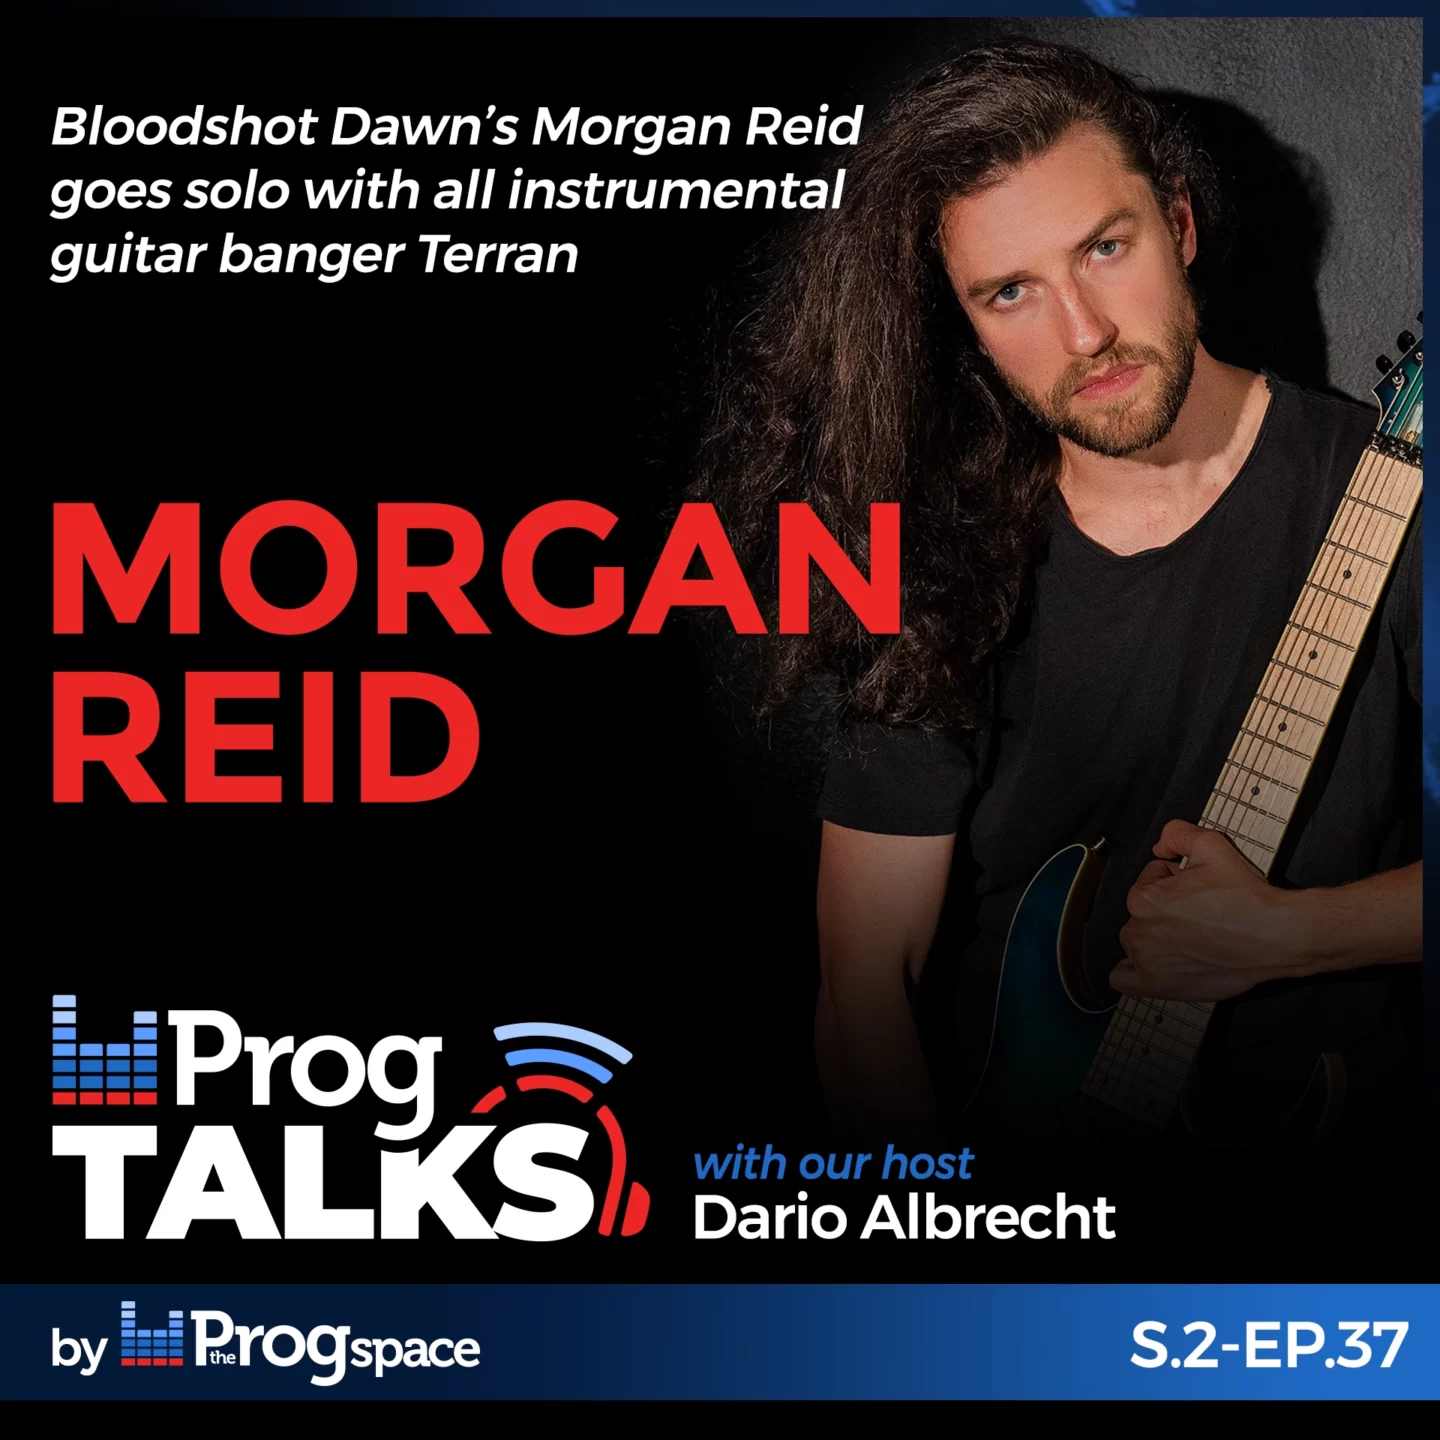 Bloodshot Dawn’s Morgan Reid goes solo with all instrumental guitar banger Terran